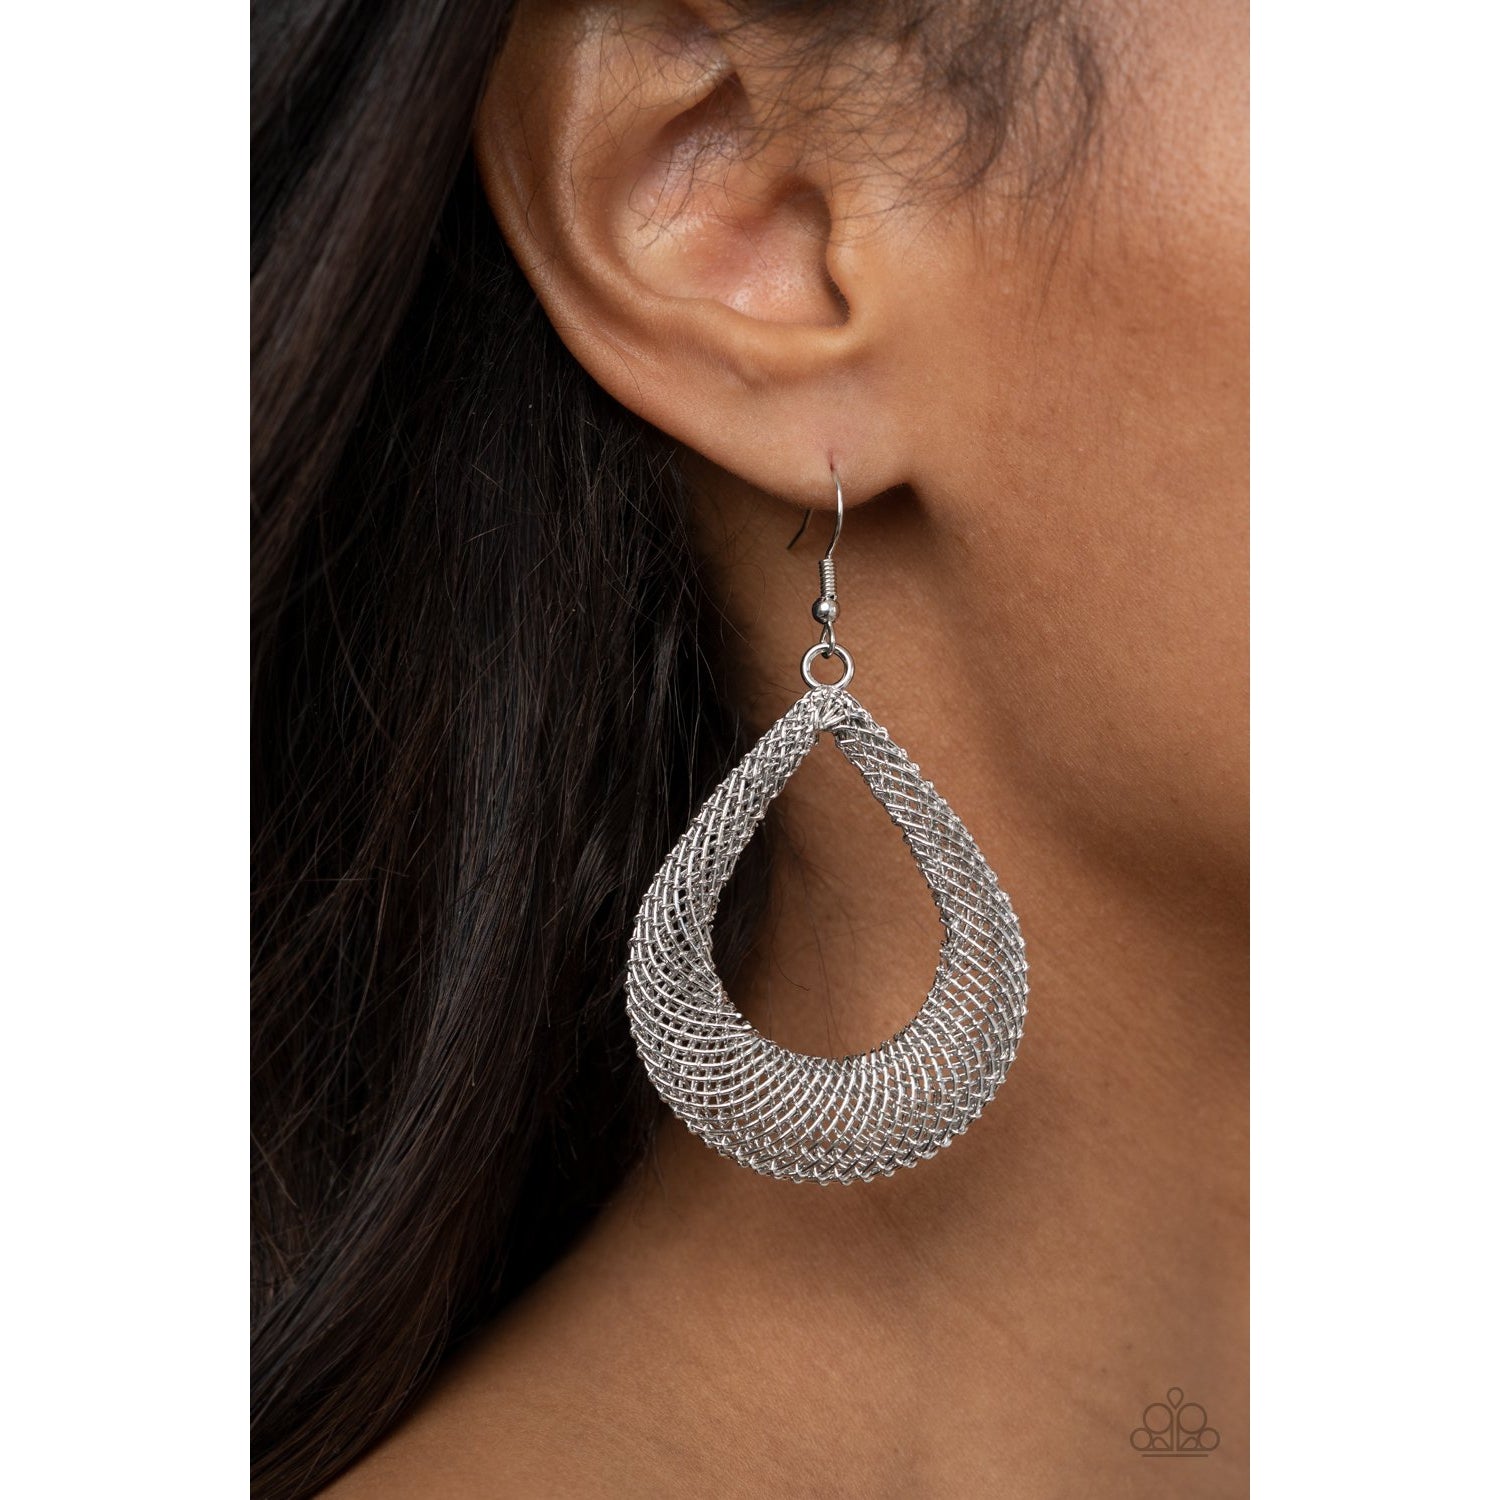 A Hot MESH - Silver Earrings - Paparazzi Accessories - GlaMarous Titi Jewels